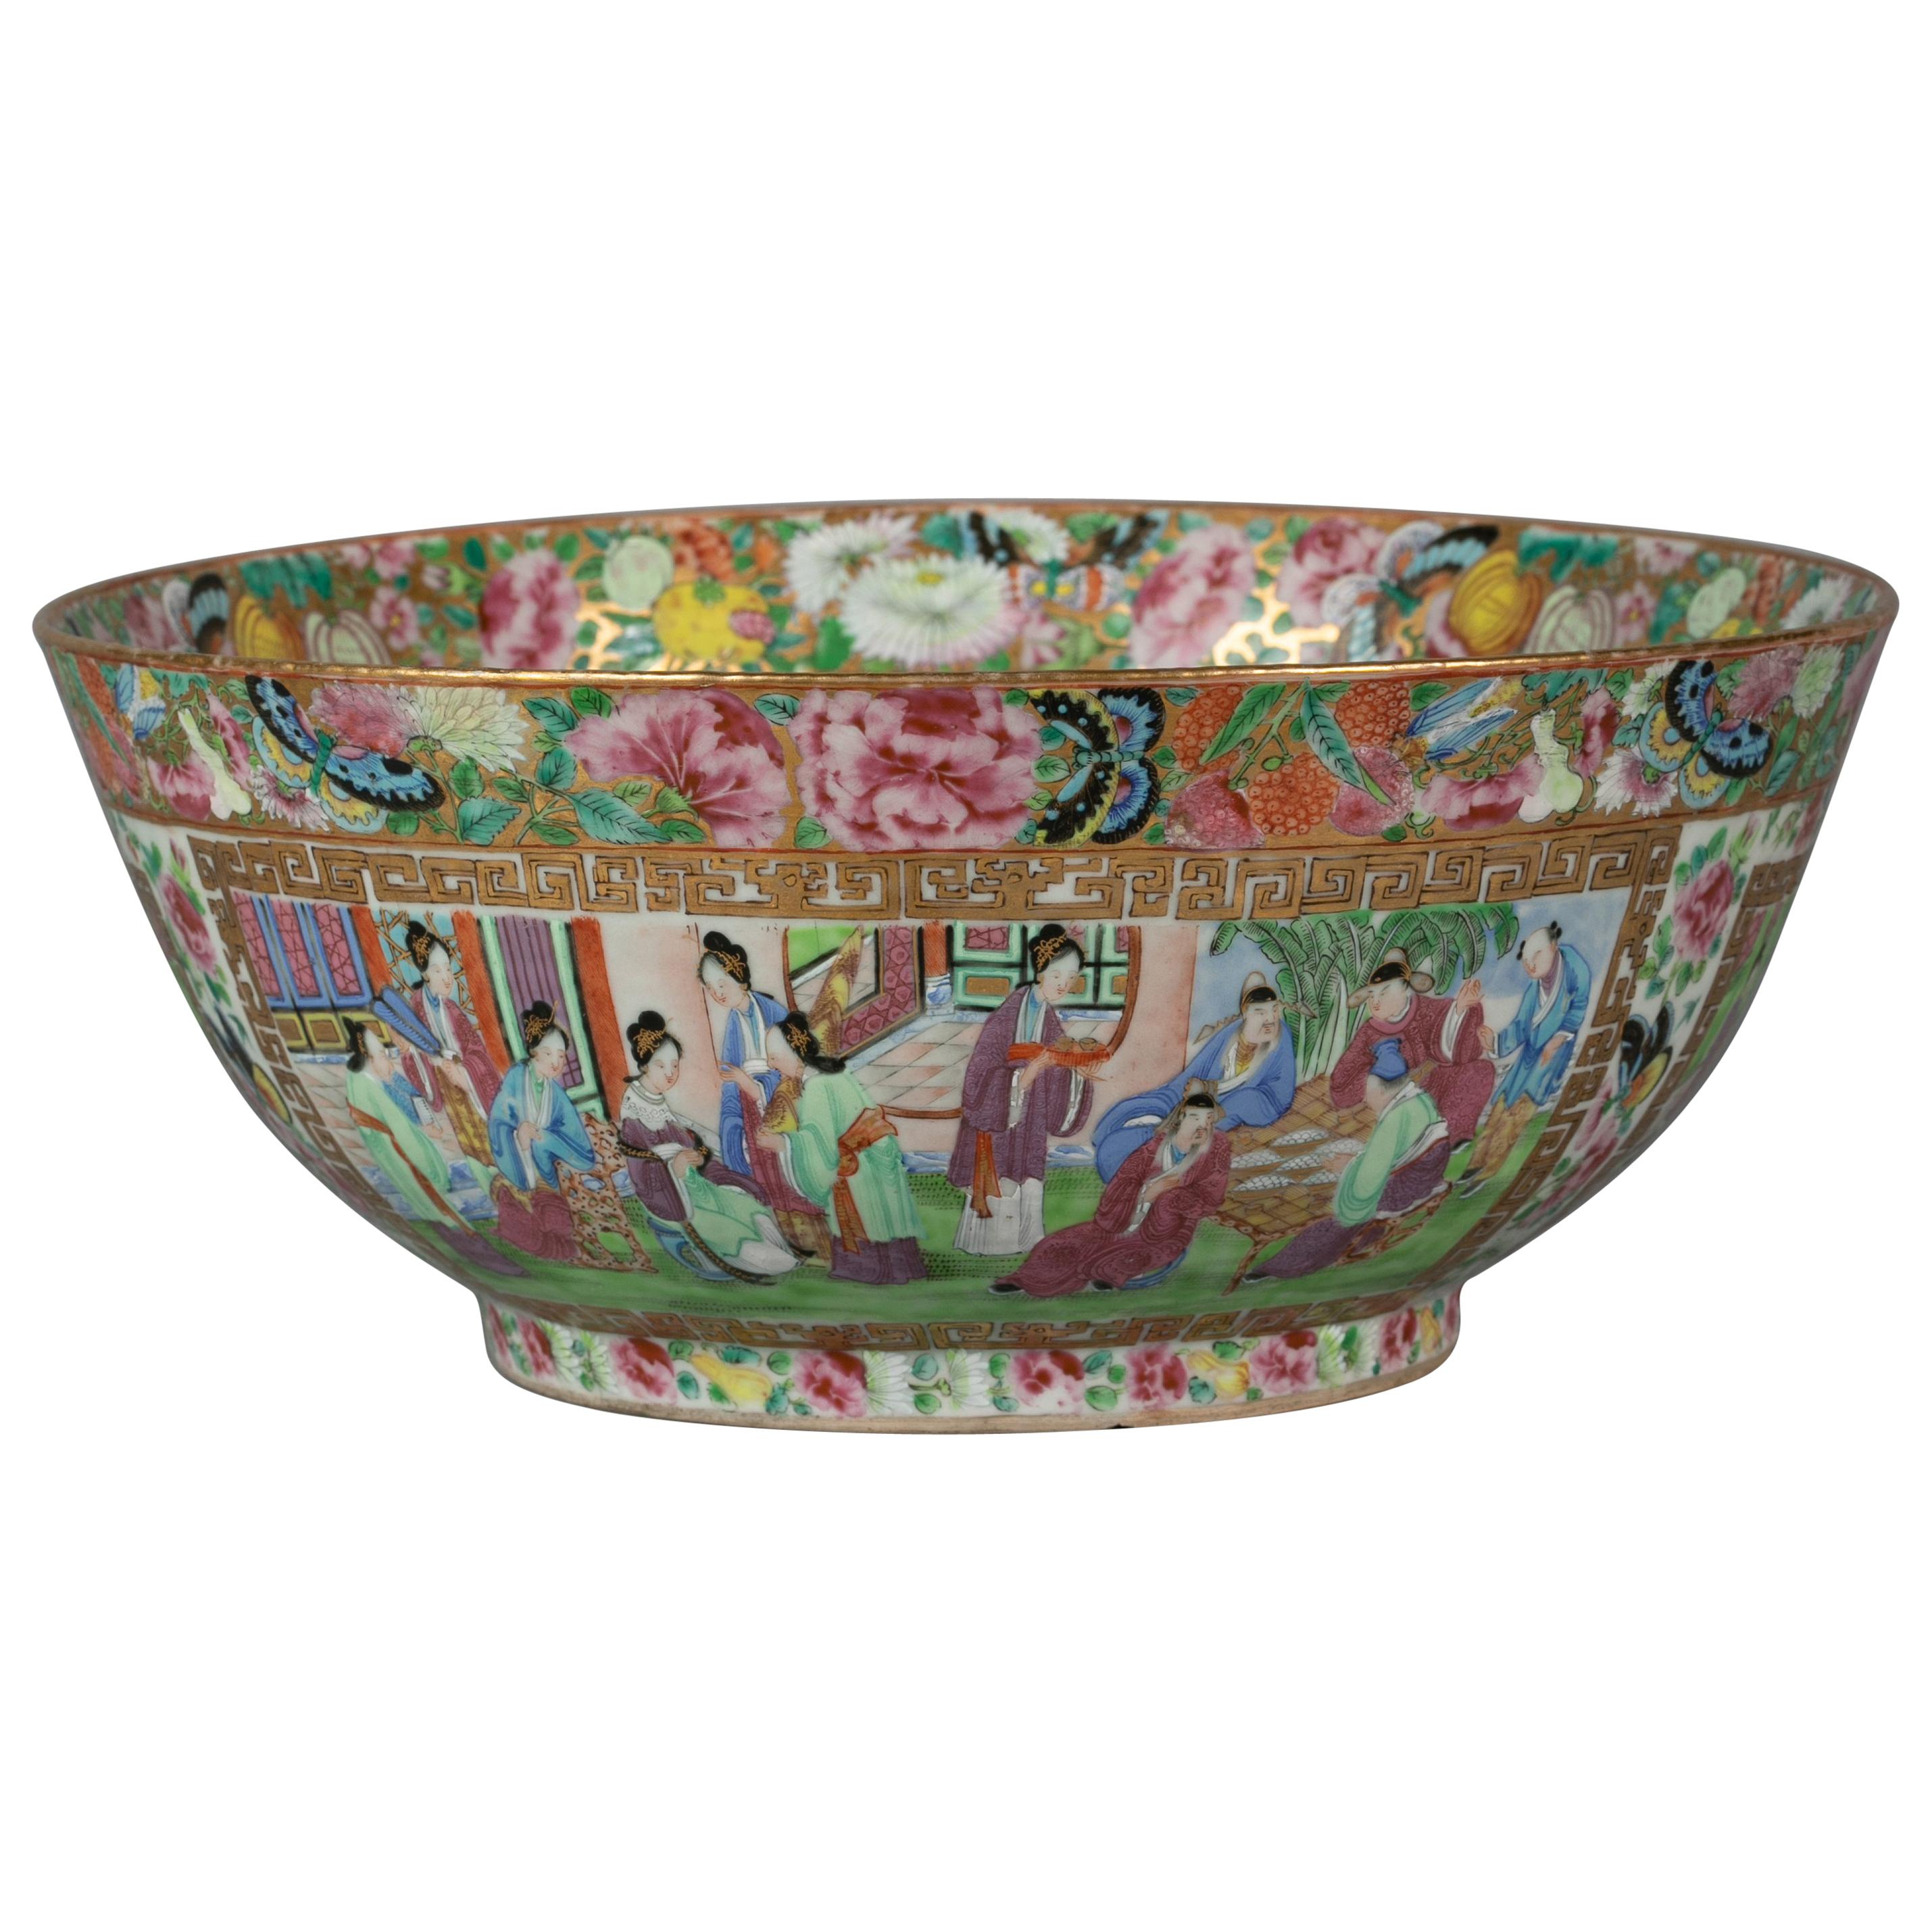 Chinese Export Rose Mandarin Porcelain Bowl, circa 1820